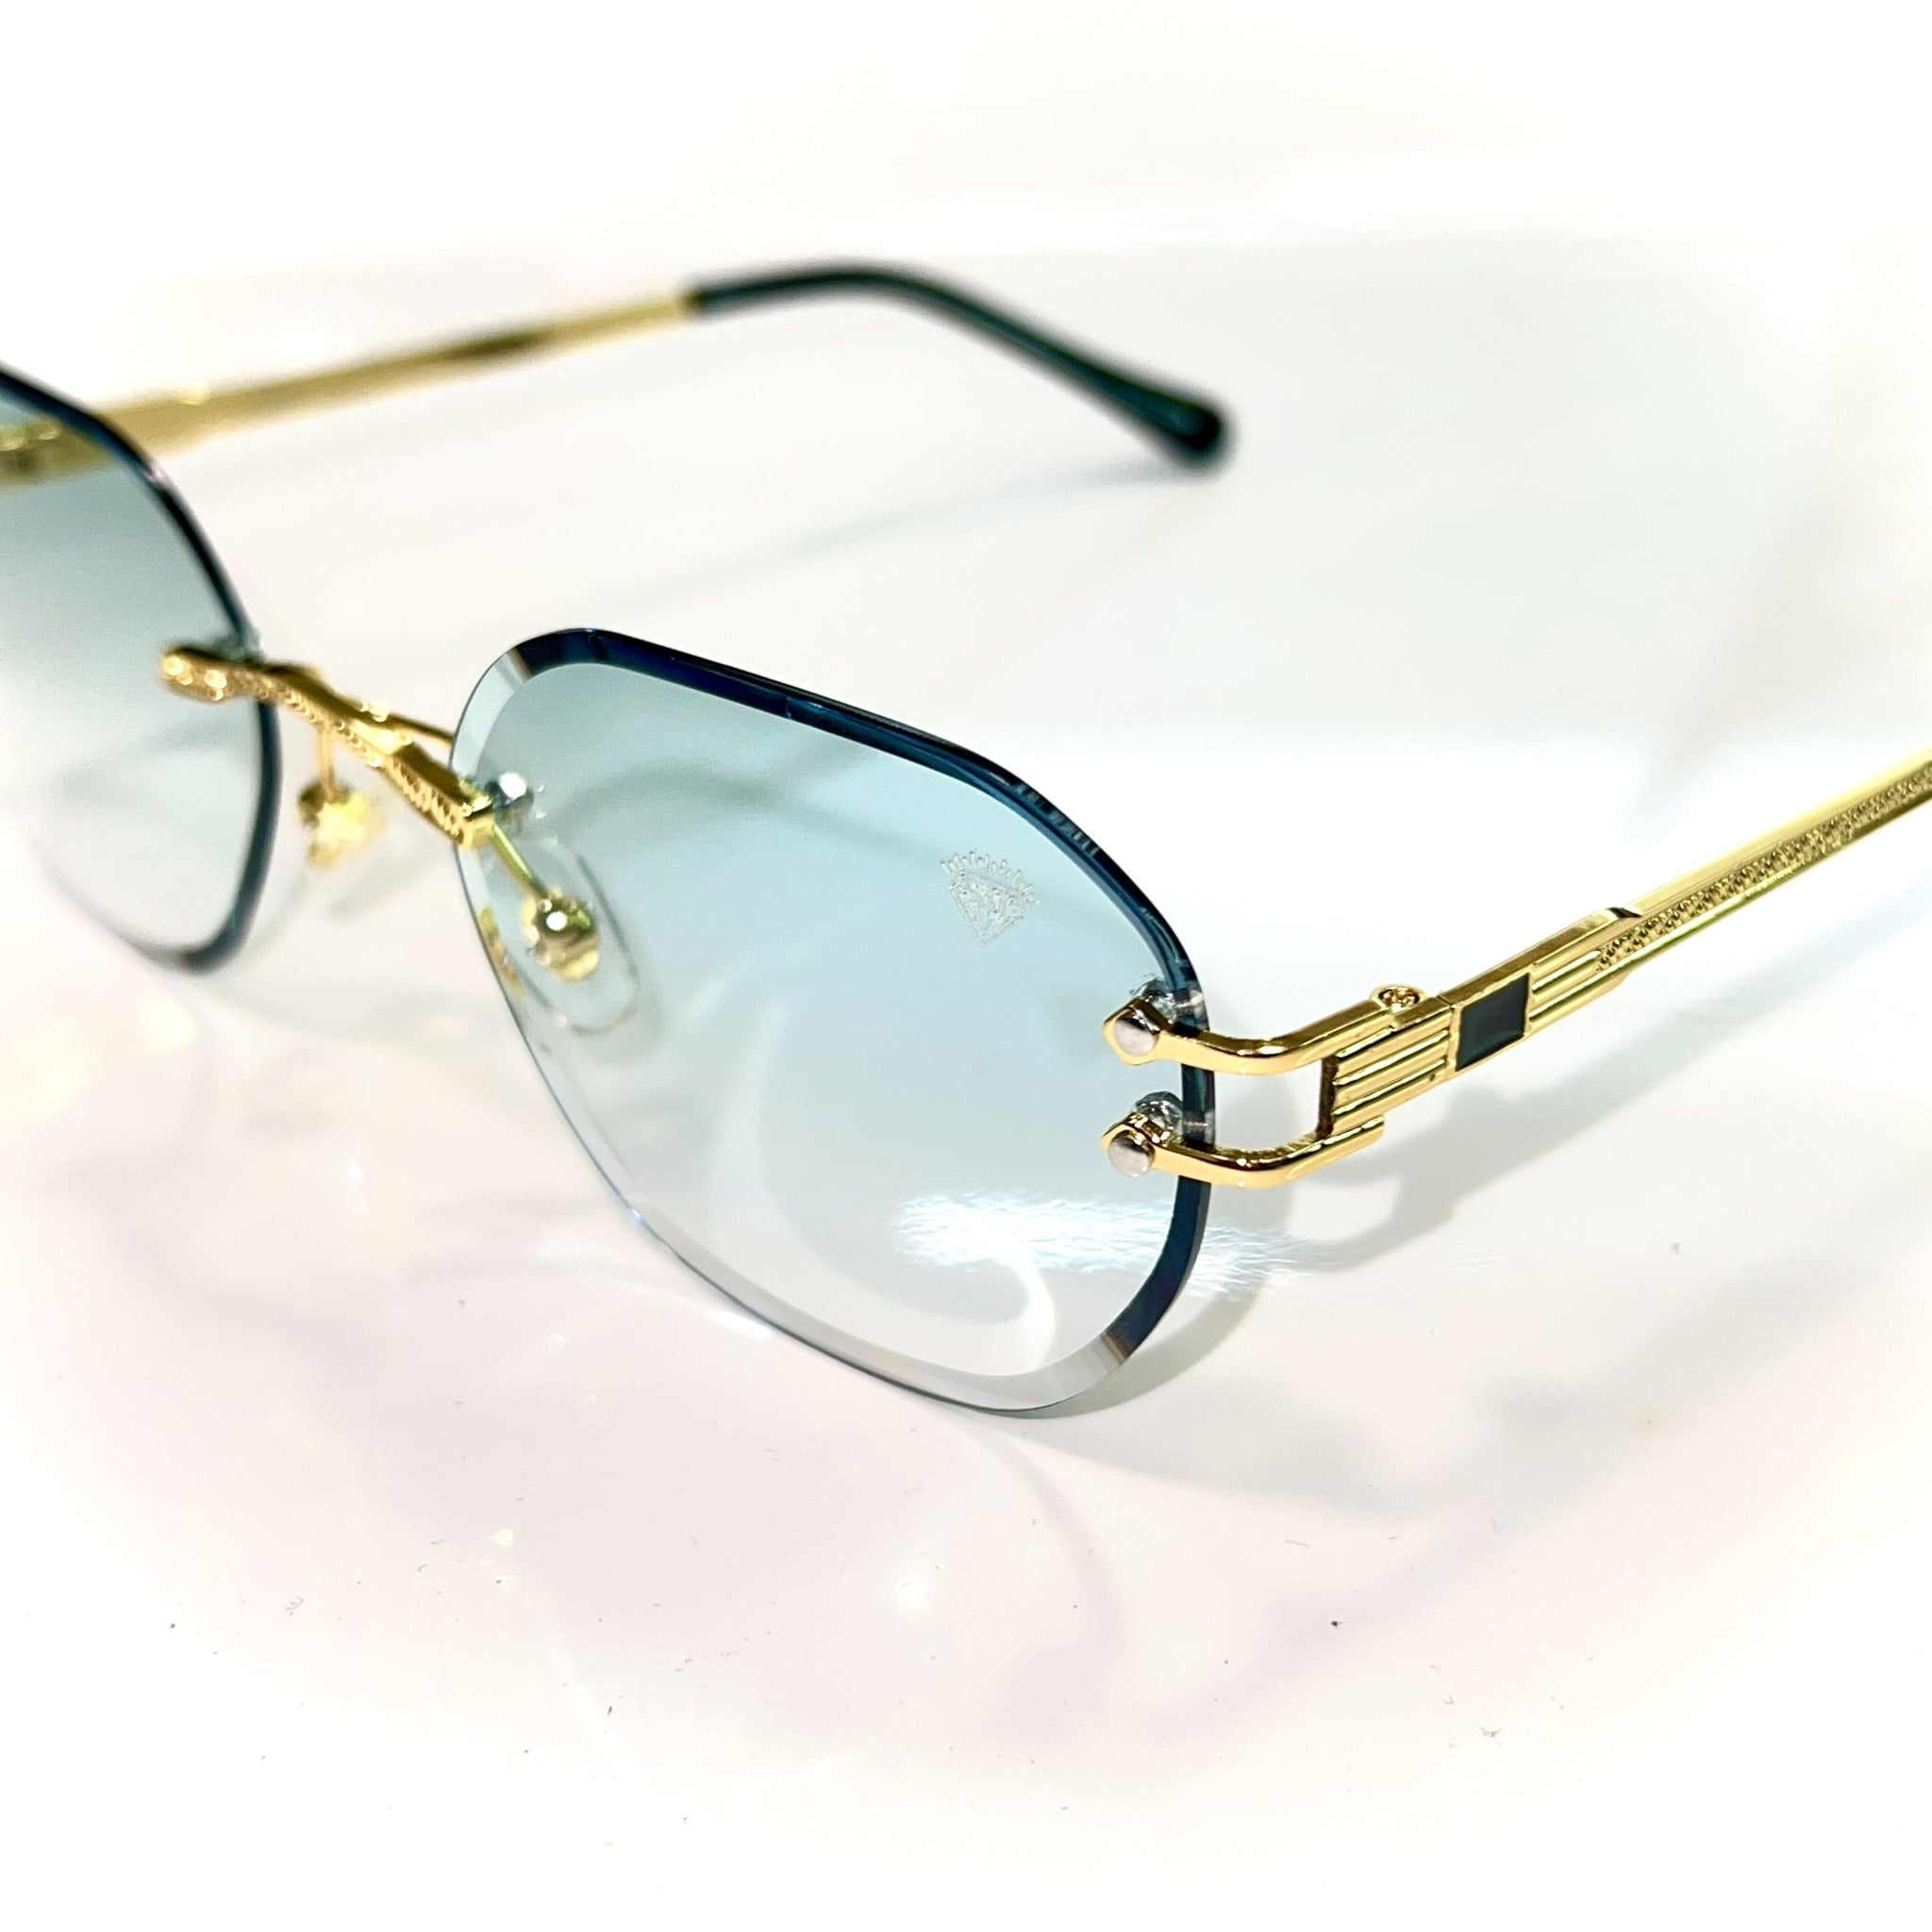 Pharaoh Glasses - Diamond cut / 14 carat gold plated - Green Shade - Sehgal Glasses